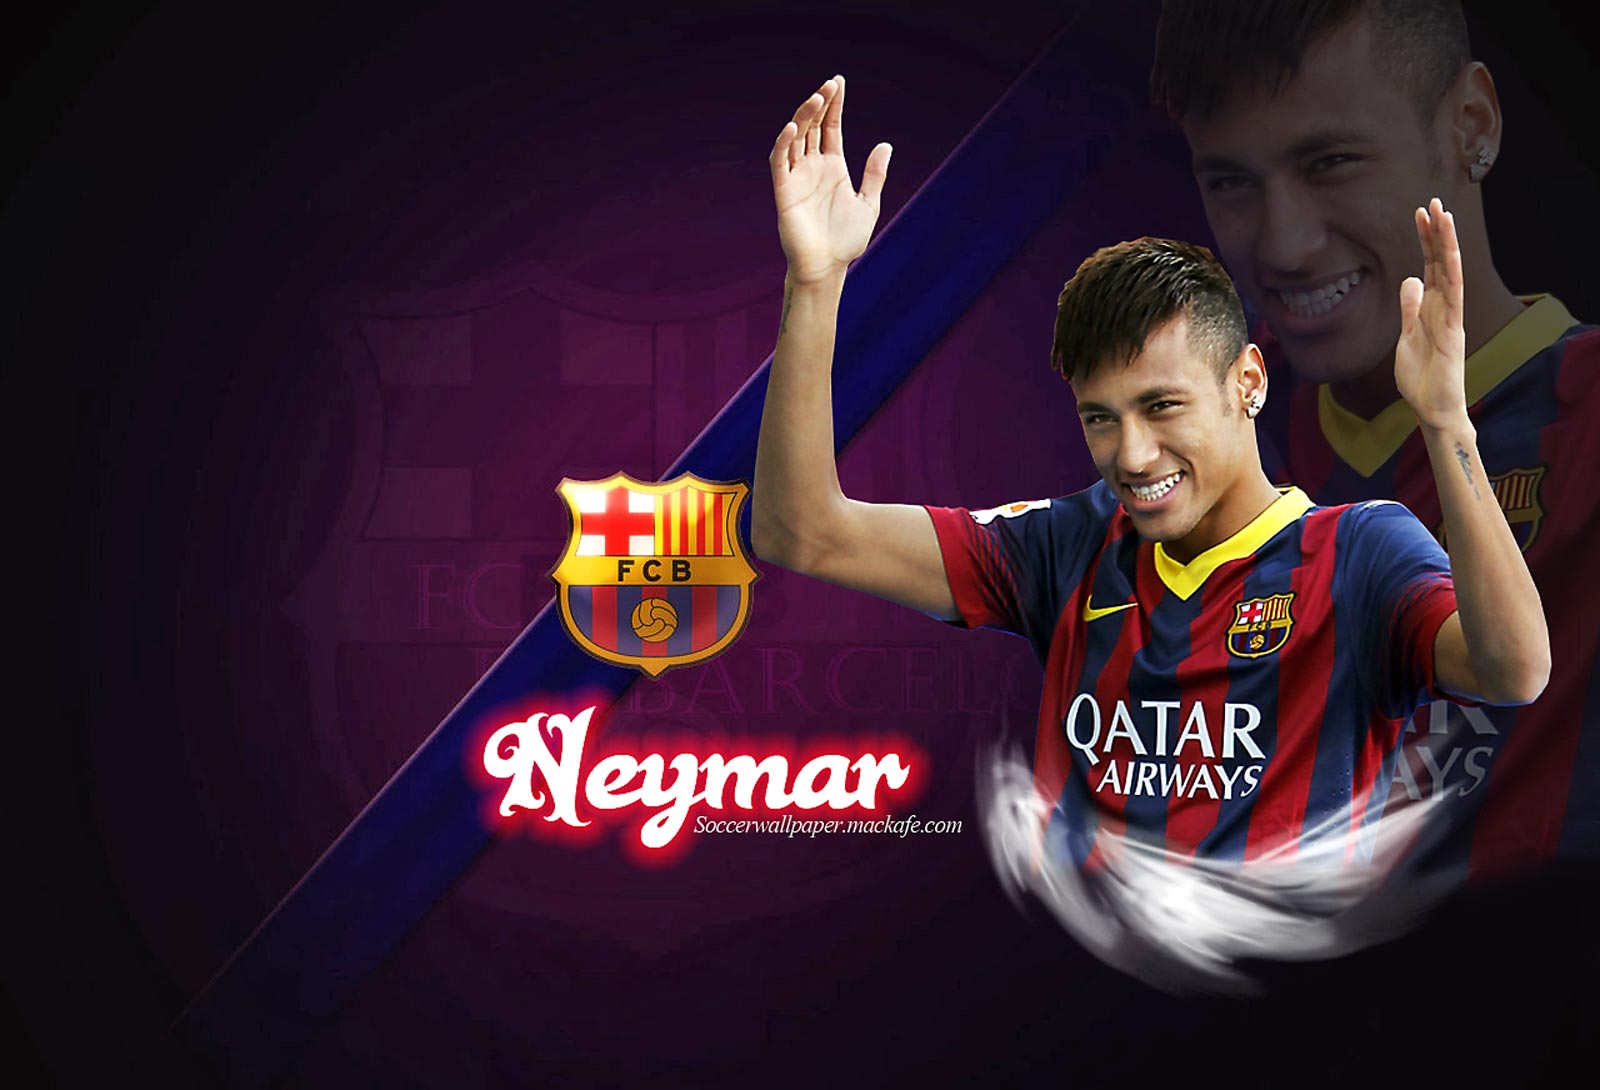 Neymar And Friend On The Barcelona Football Cl Wallpaper High